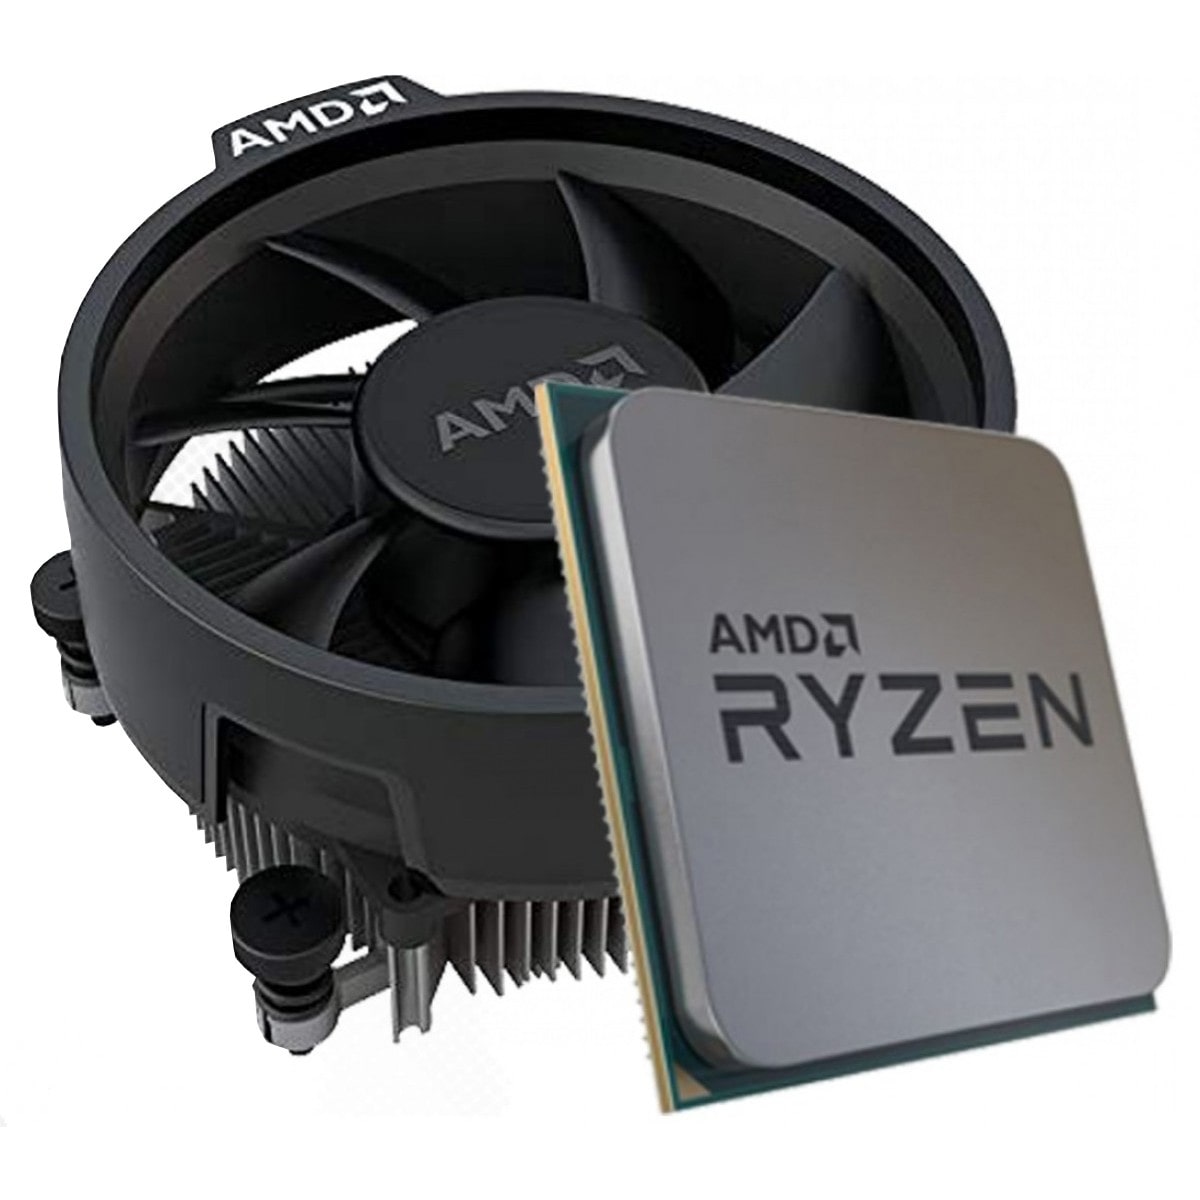 AMD Ryzen 5 3500 with Wraith Stealth